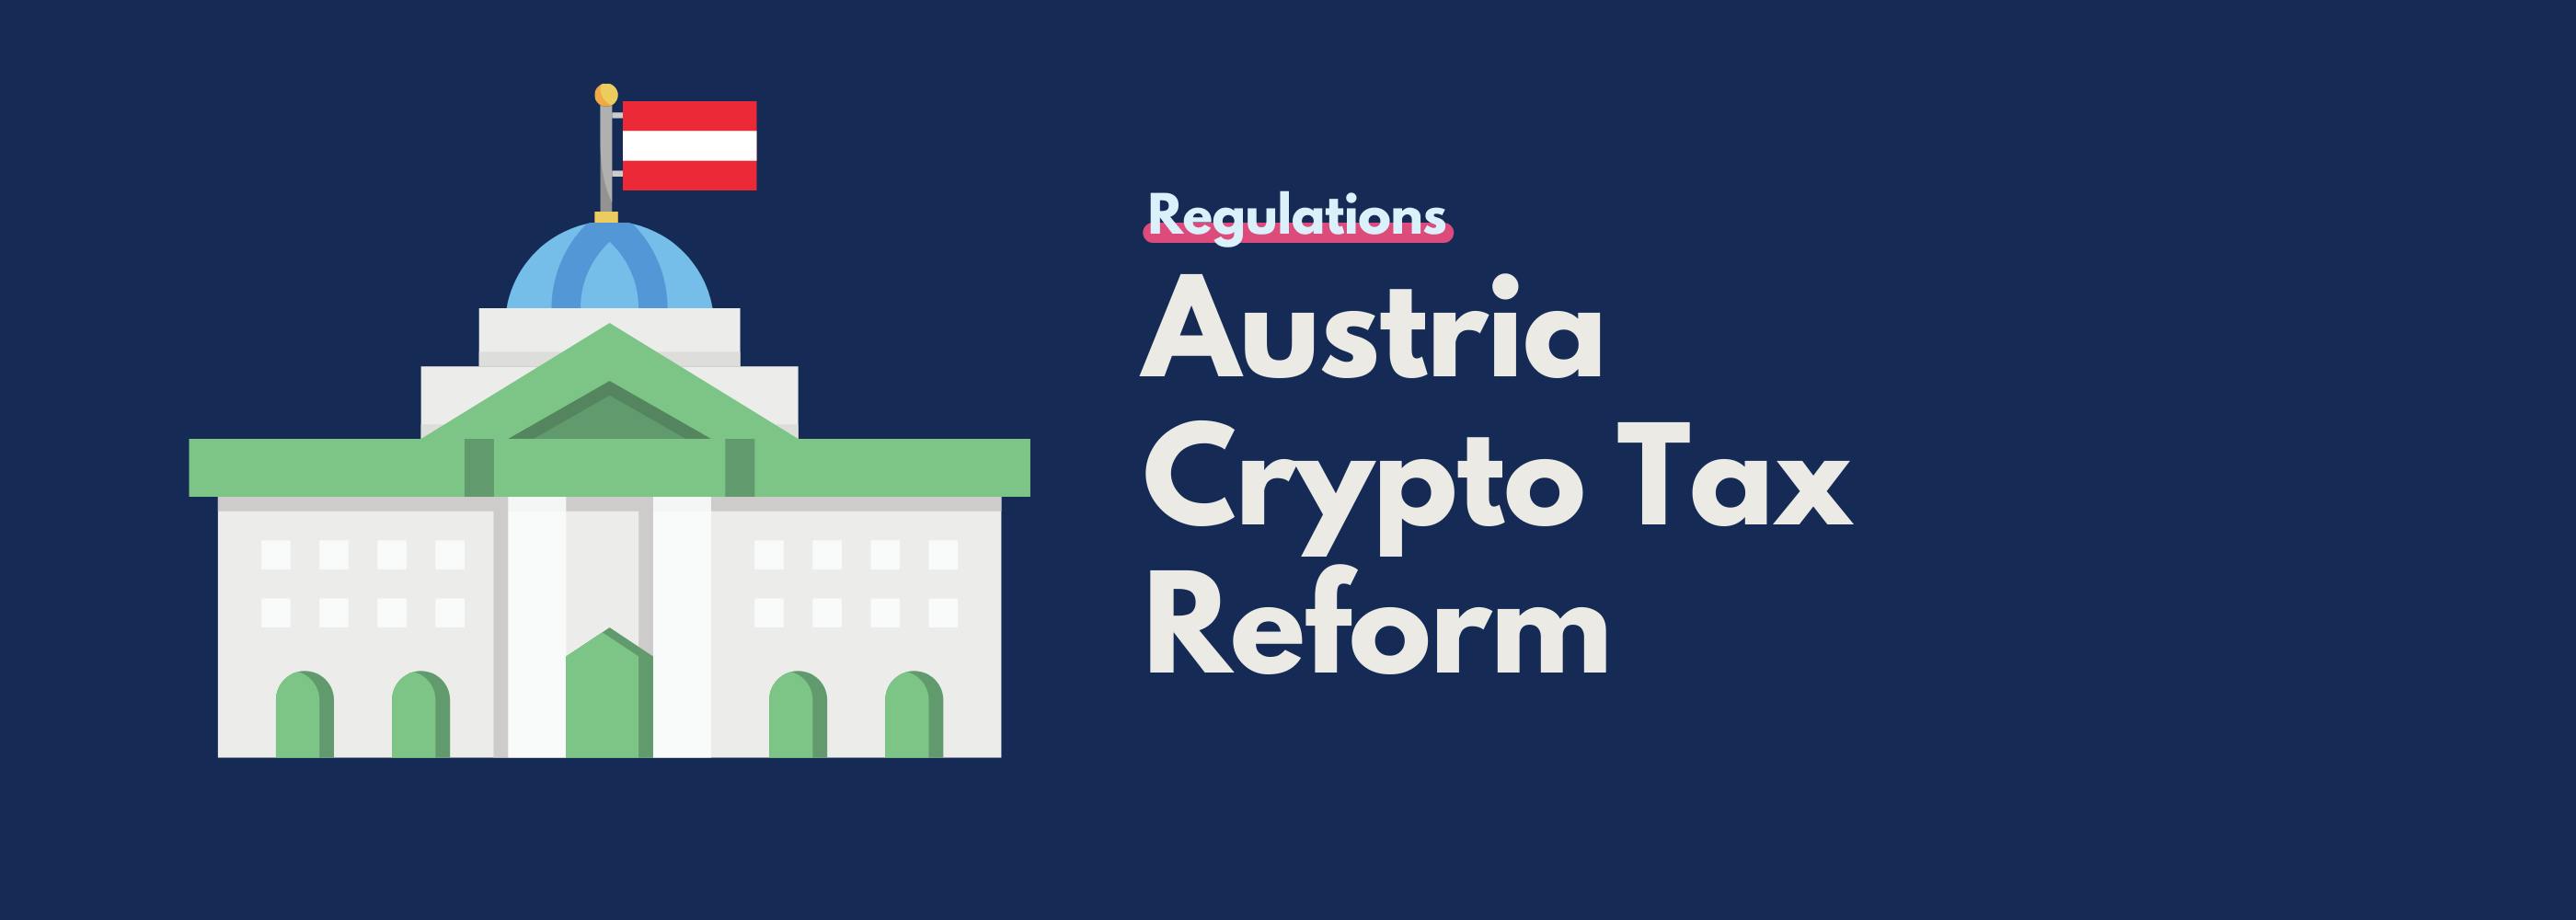 Austria Crypto Tax Reform